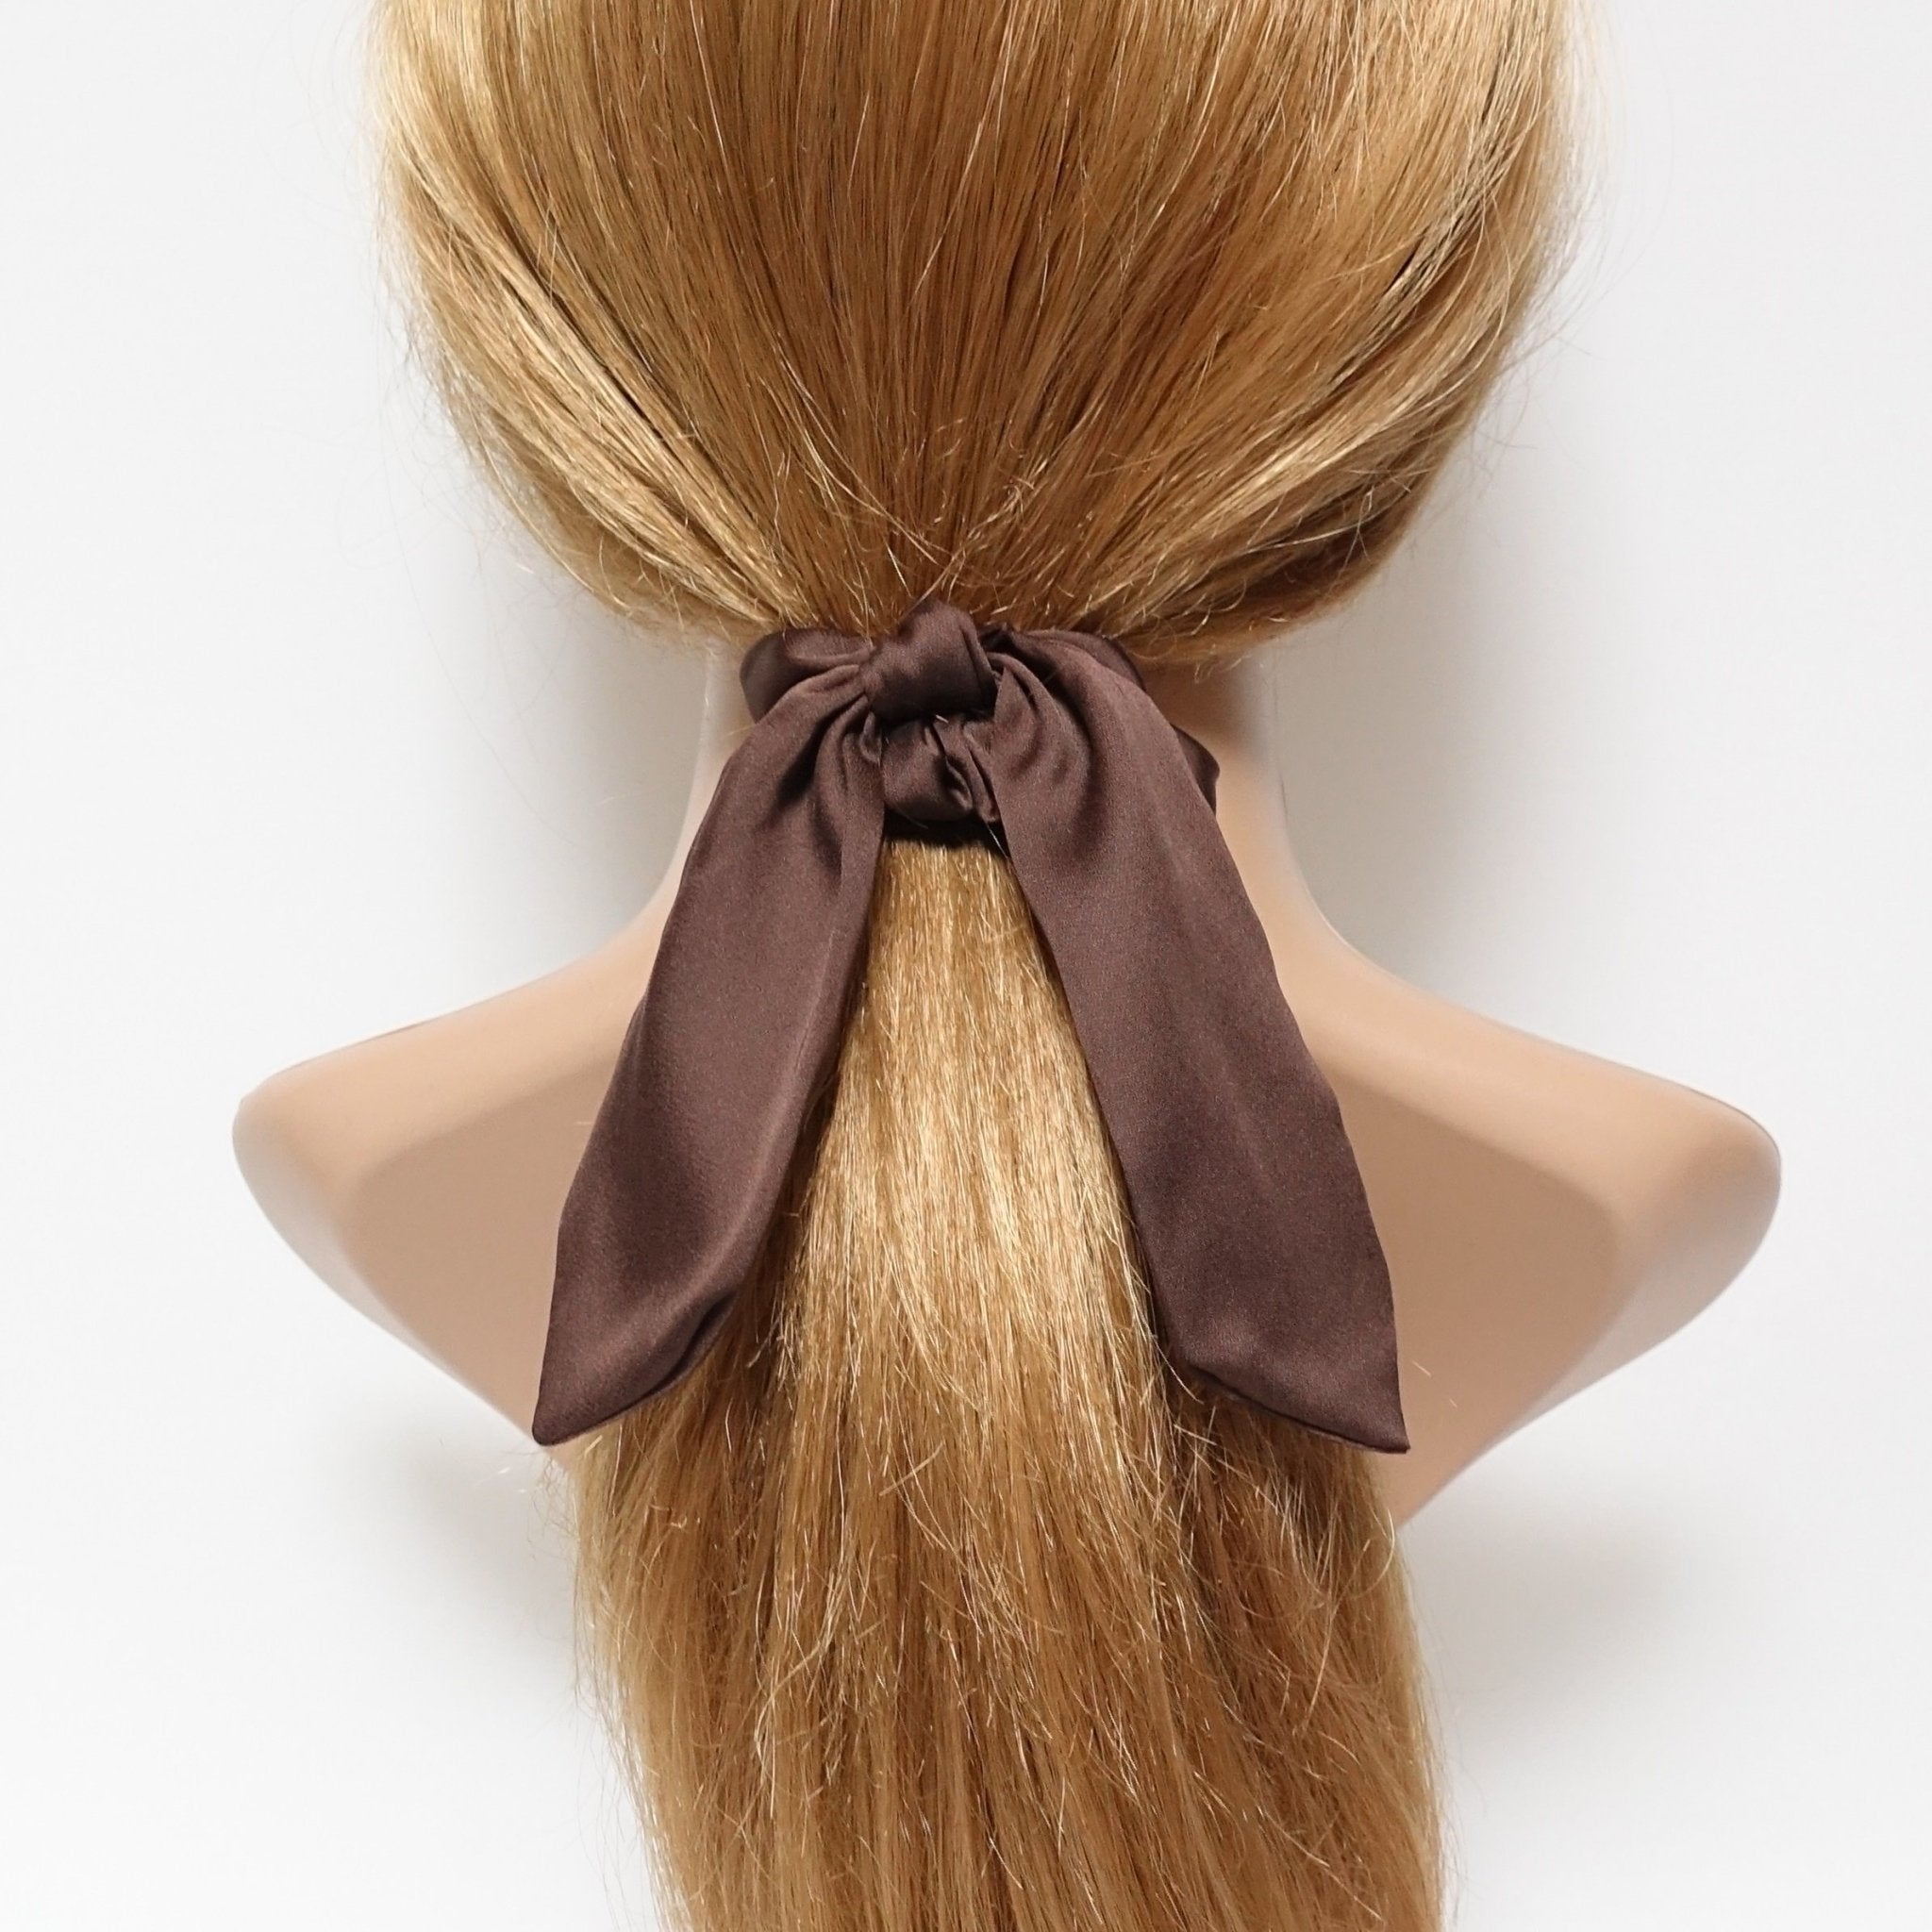 veryshine.com scrunchies/hair holder satin hair bow knot scrunchies glossy tail bow scrunchy women hair accessory